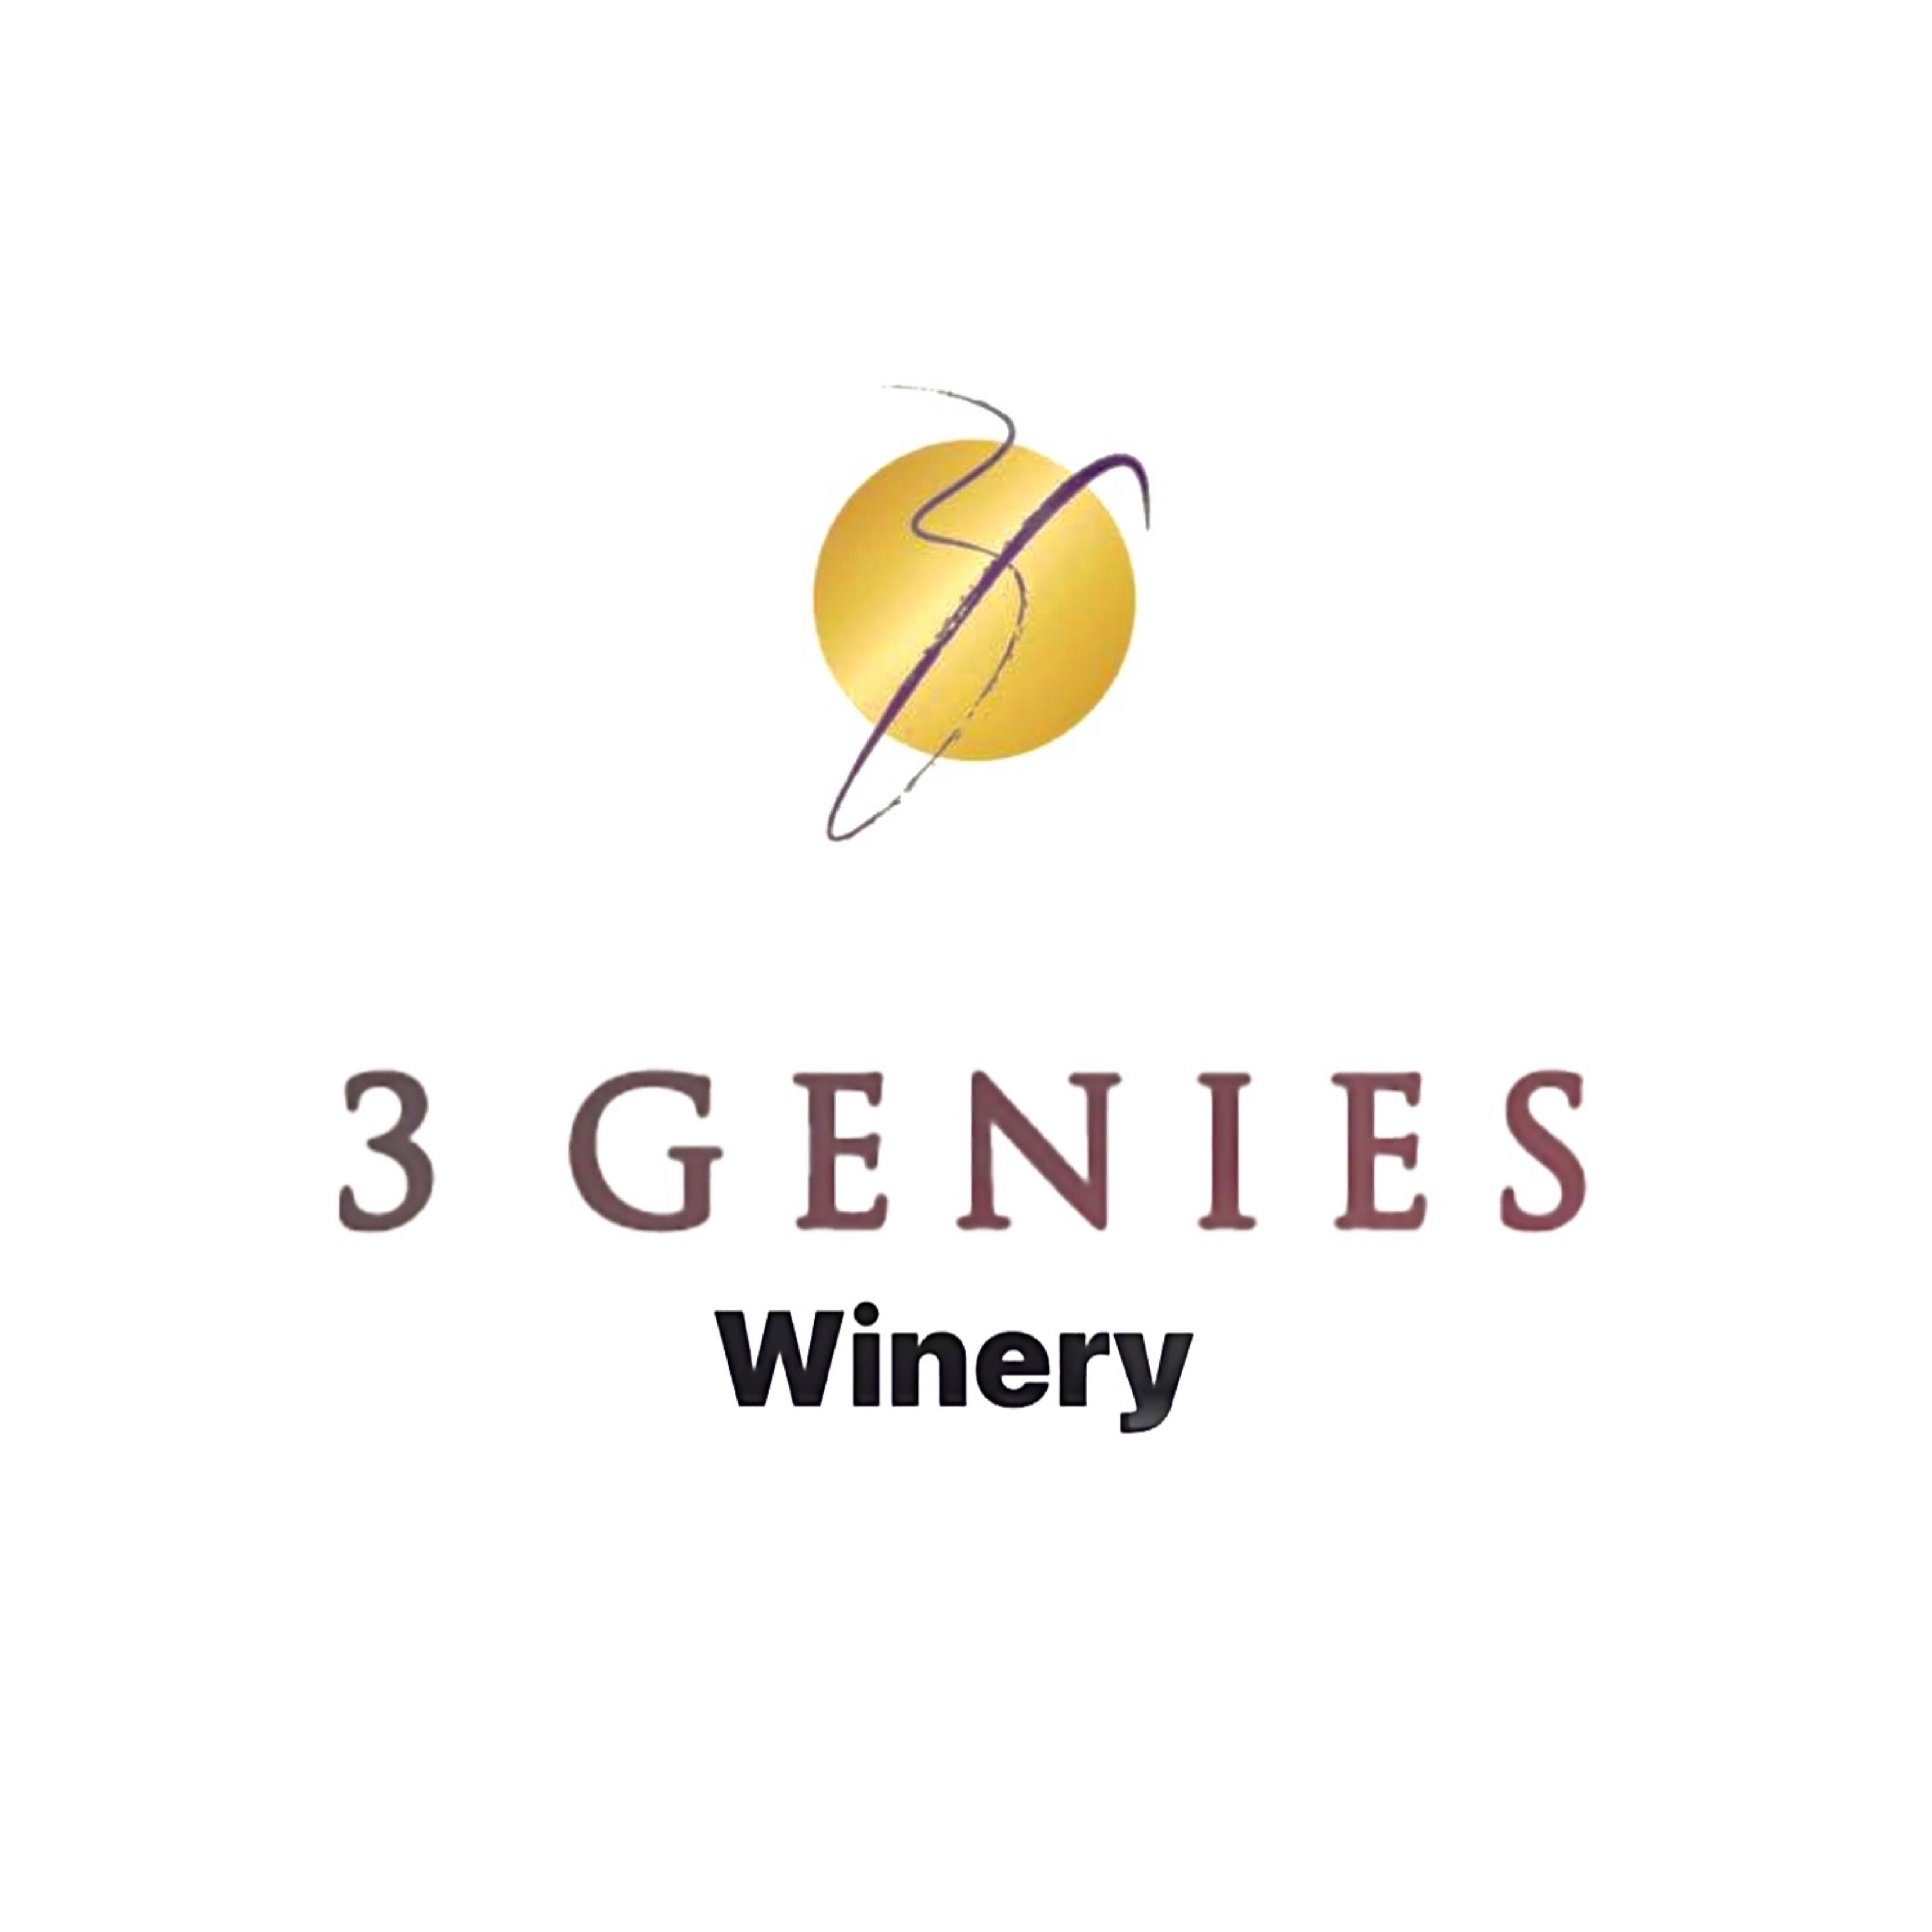 3 Genies Winery三精灵酒庄